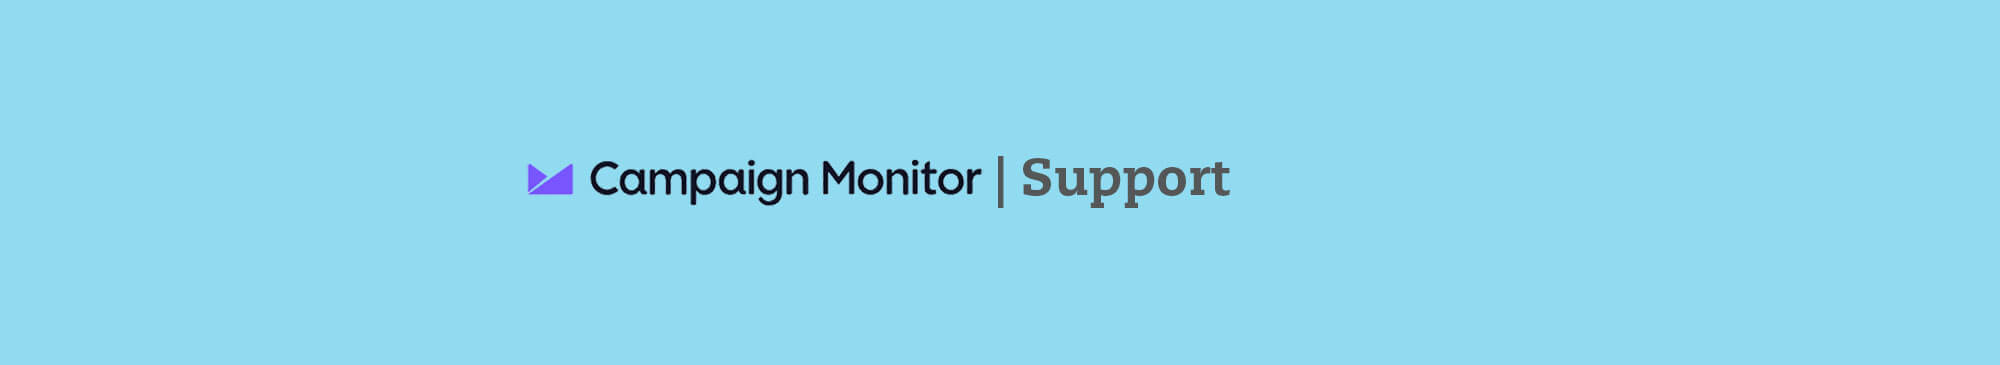 R&R/COM E-Marketing-Tool Support speziell für Campaign Monitor